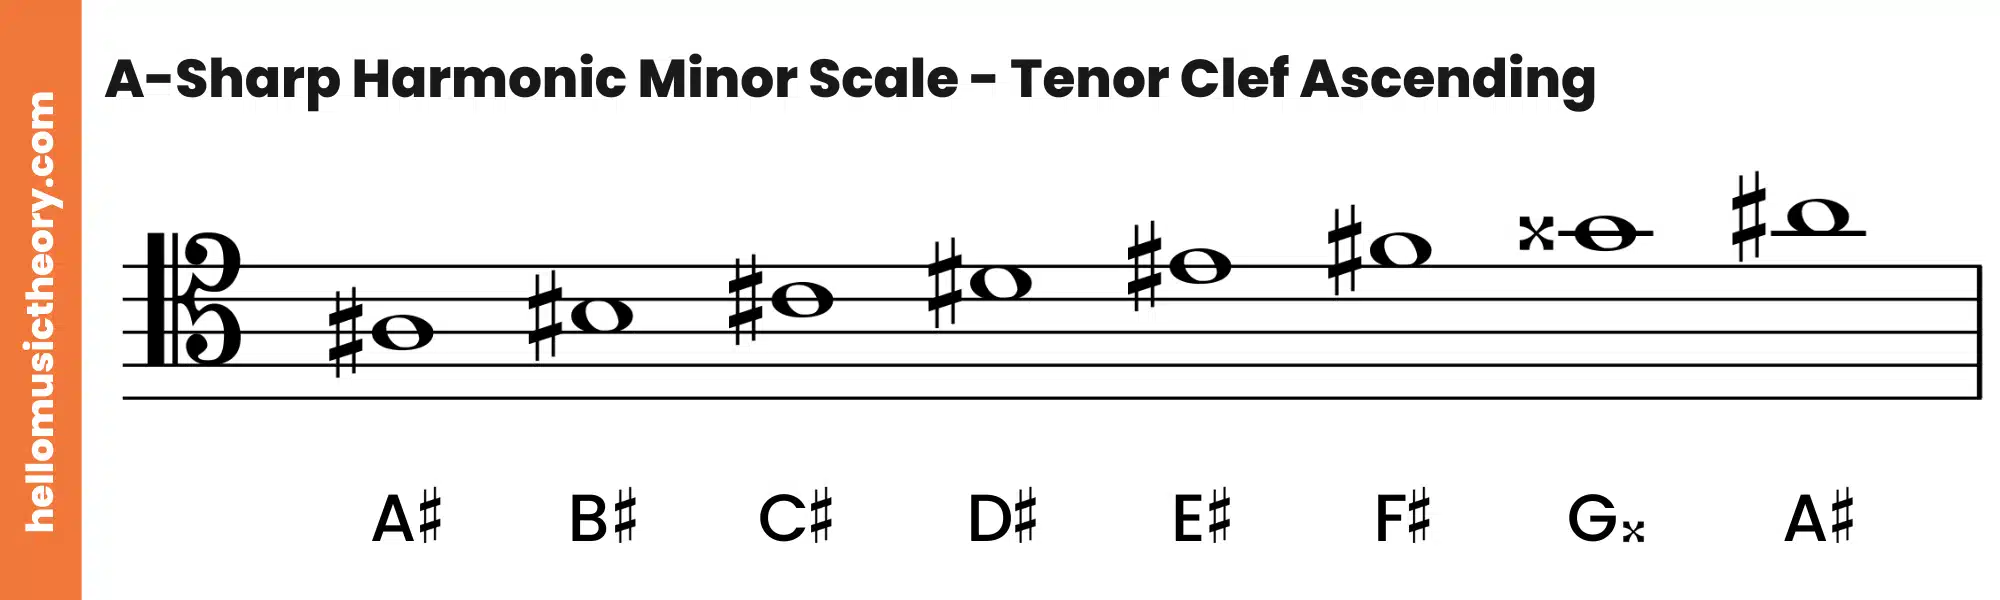 A-Sharp Harmonic Minor Scale Tenor Clef Ascending